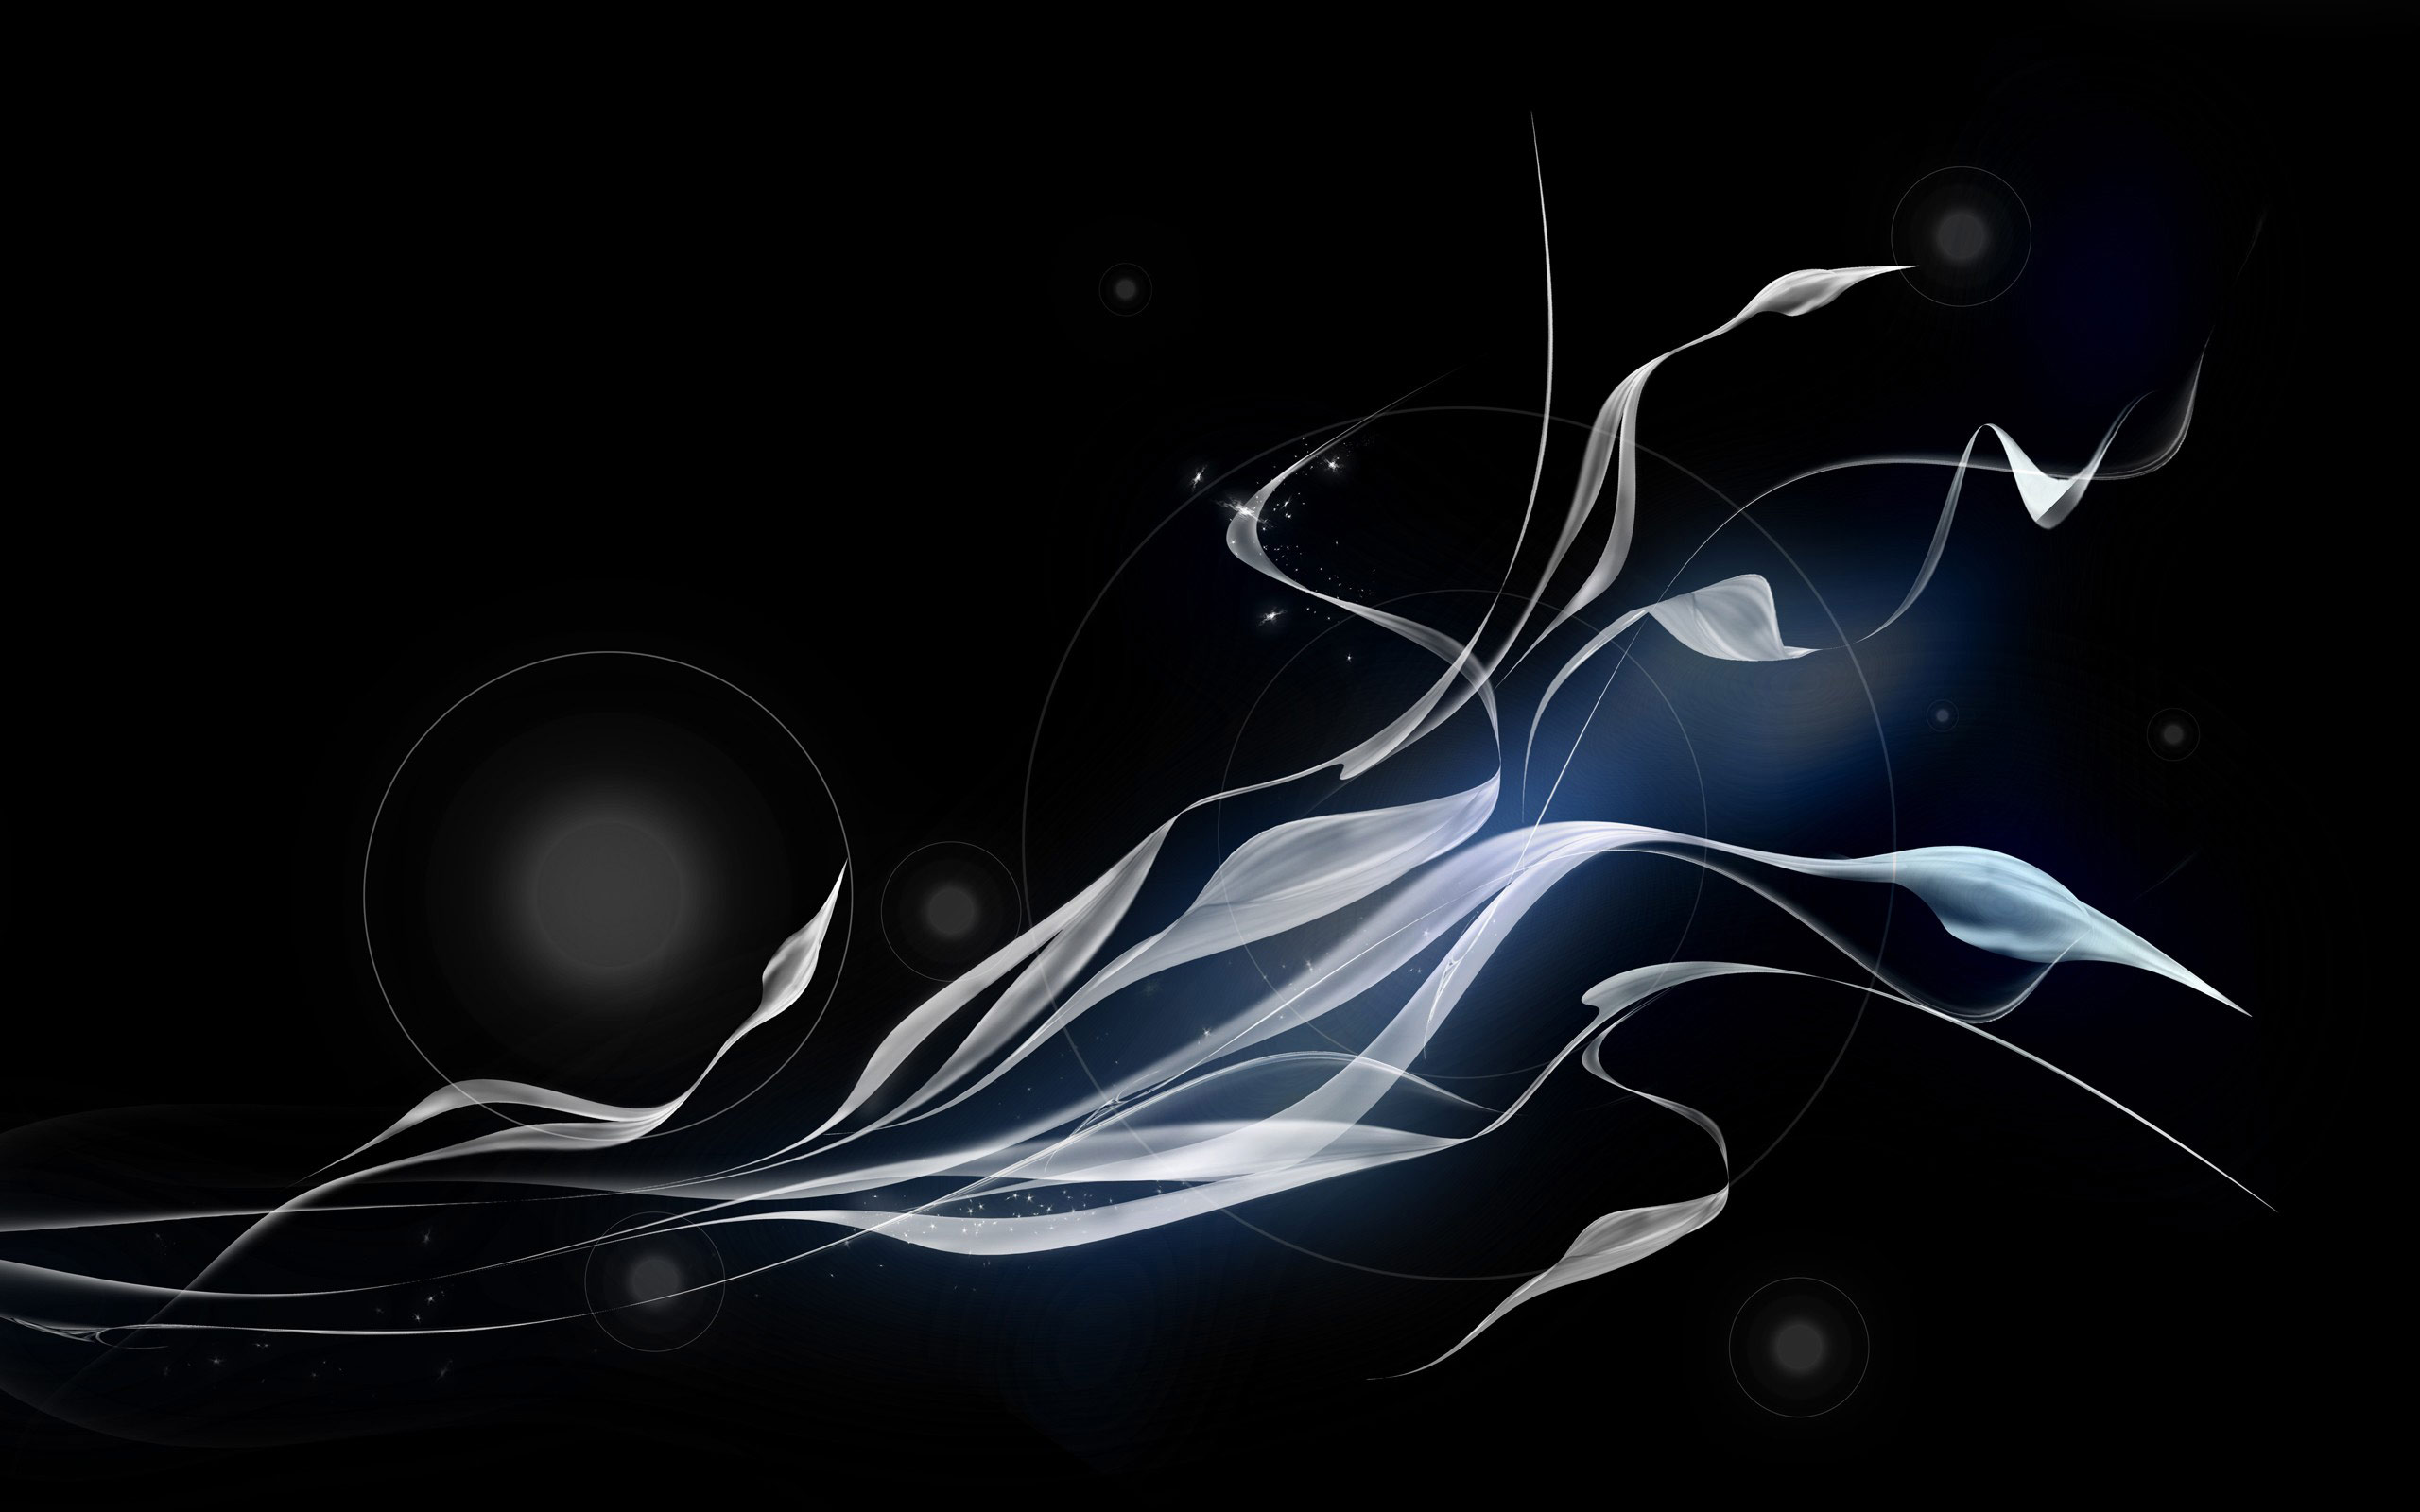 Solar wind desktop wallpaper: Artistic depiction of space.